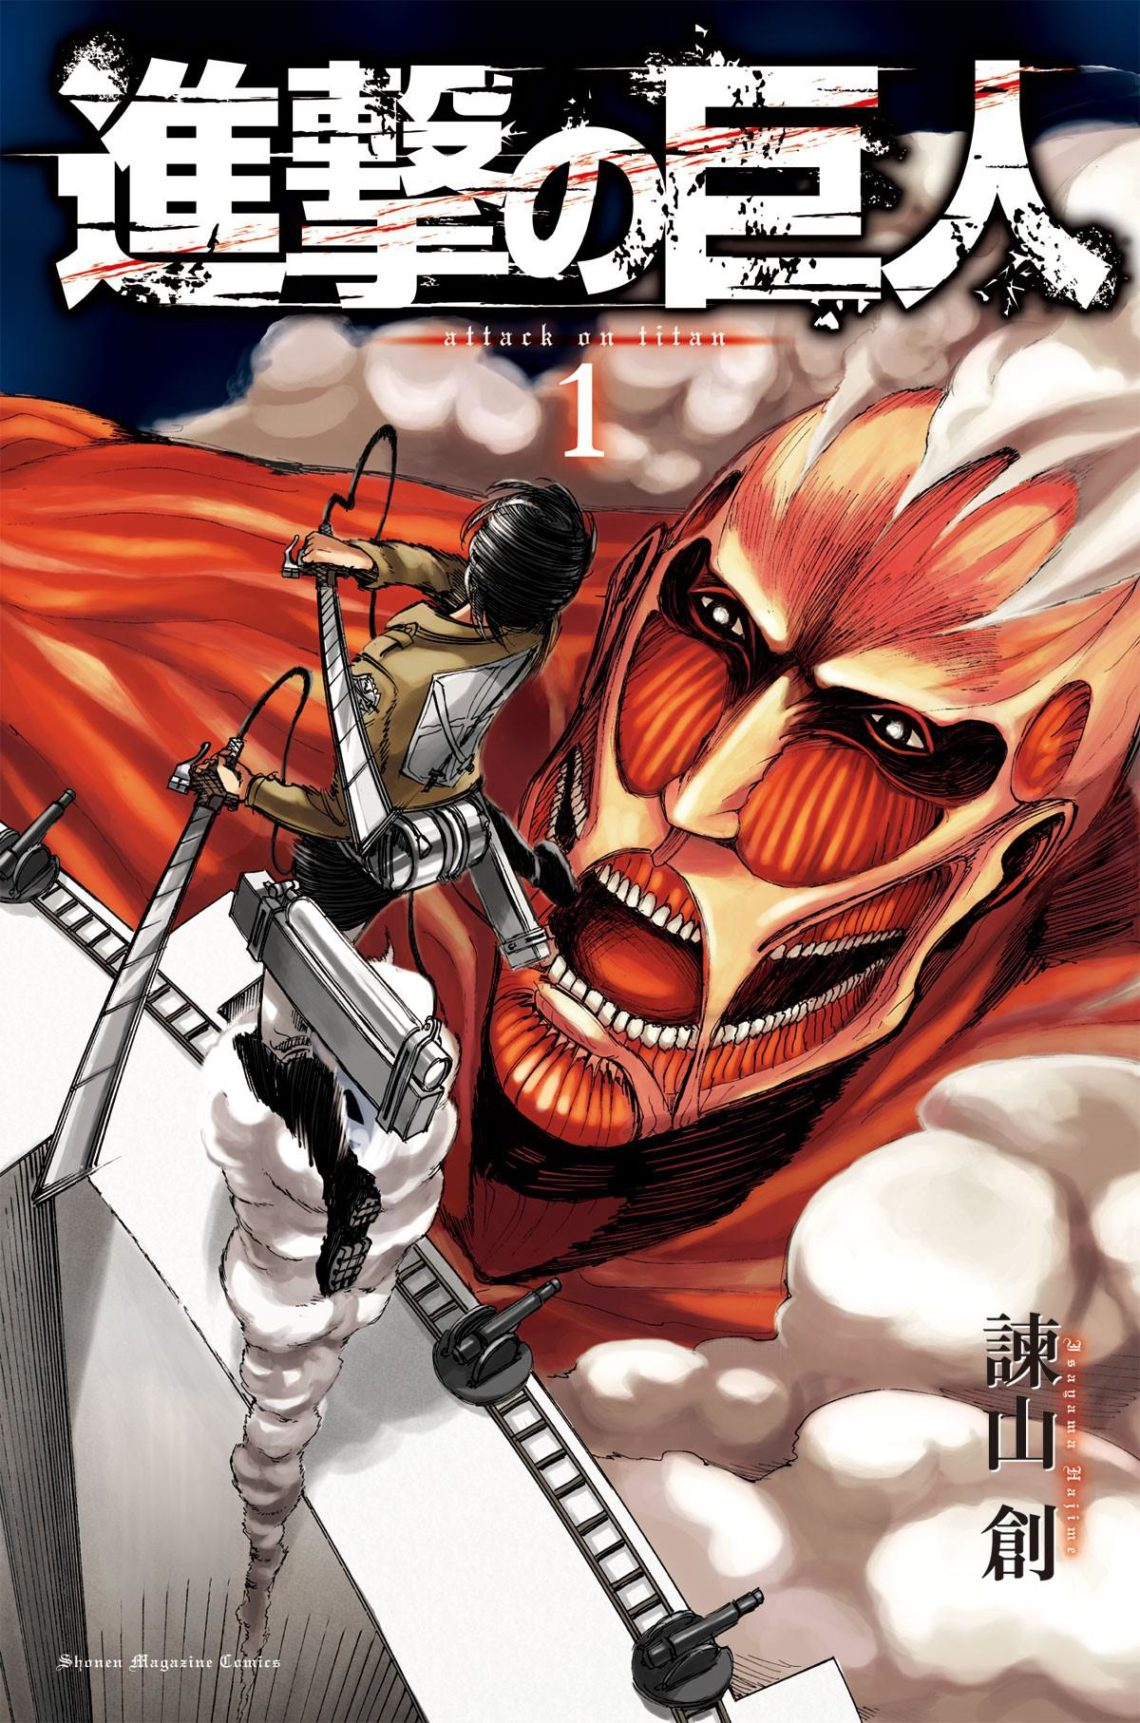 10 Years of Attack on Titan Anime #attackontitan #shingekinokyojin #aot #snk  #shingeki #kyojin #titan #進撃の巨人 #anime #manga